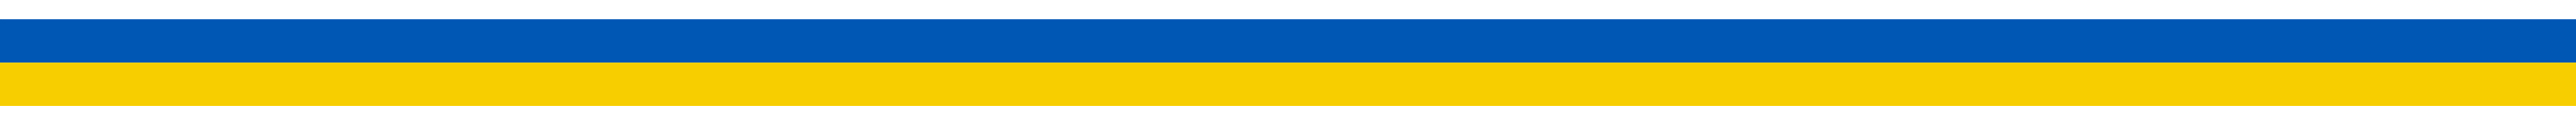 Separateur drapeau Ukraine